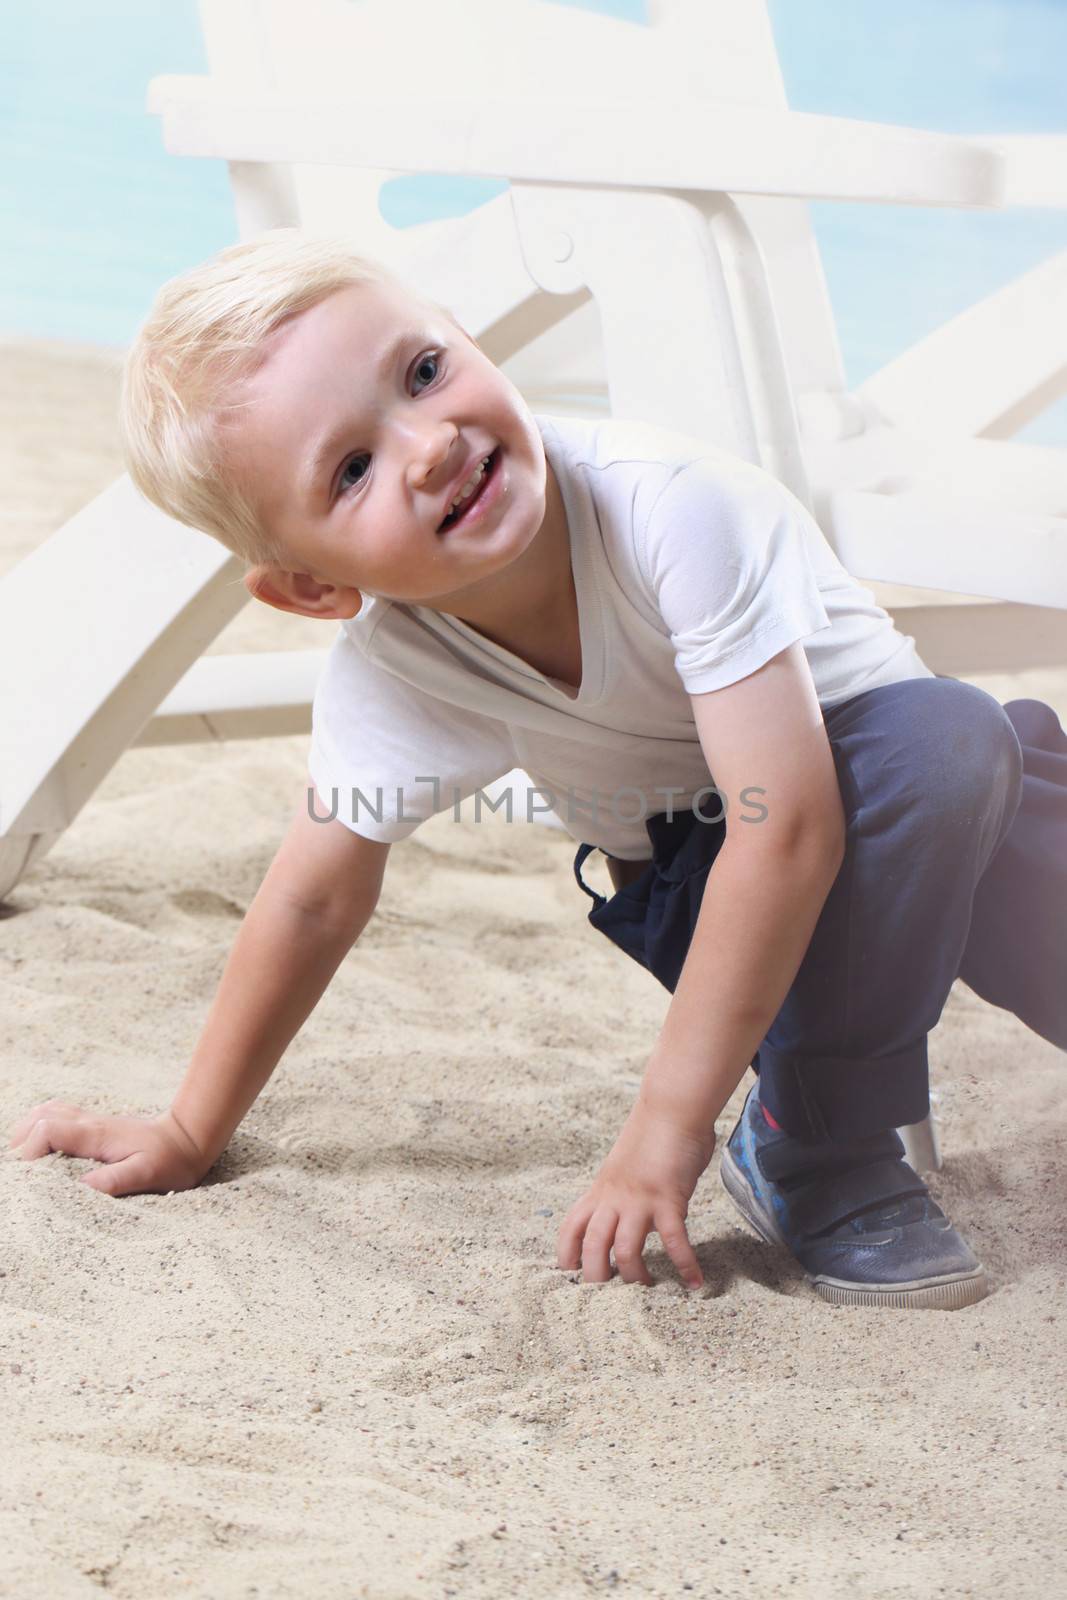 Beautiful little boy on the beach